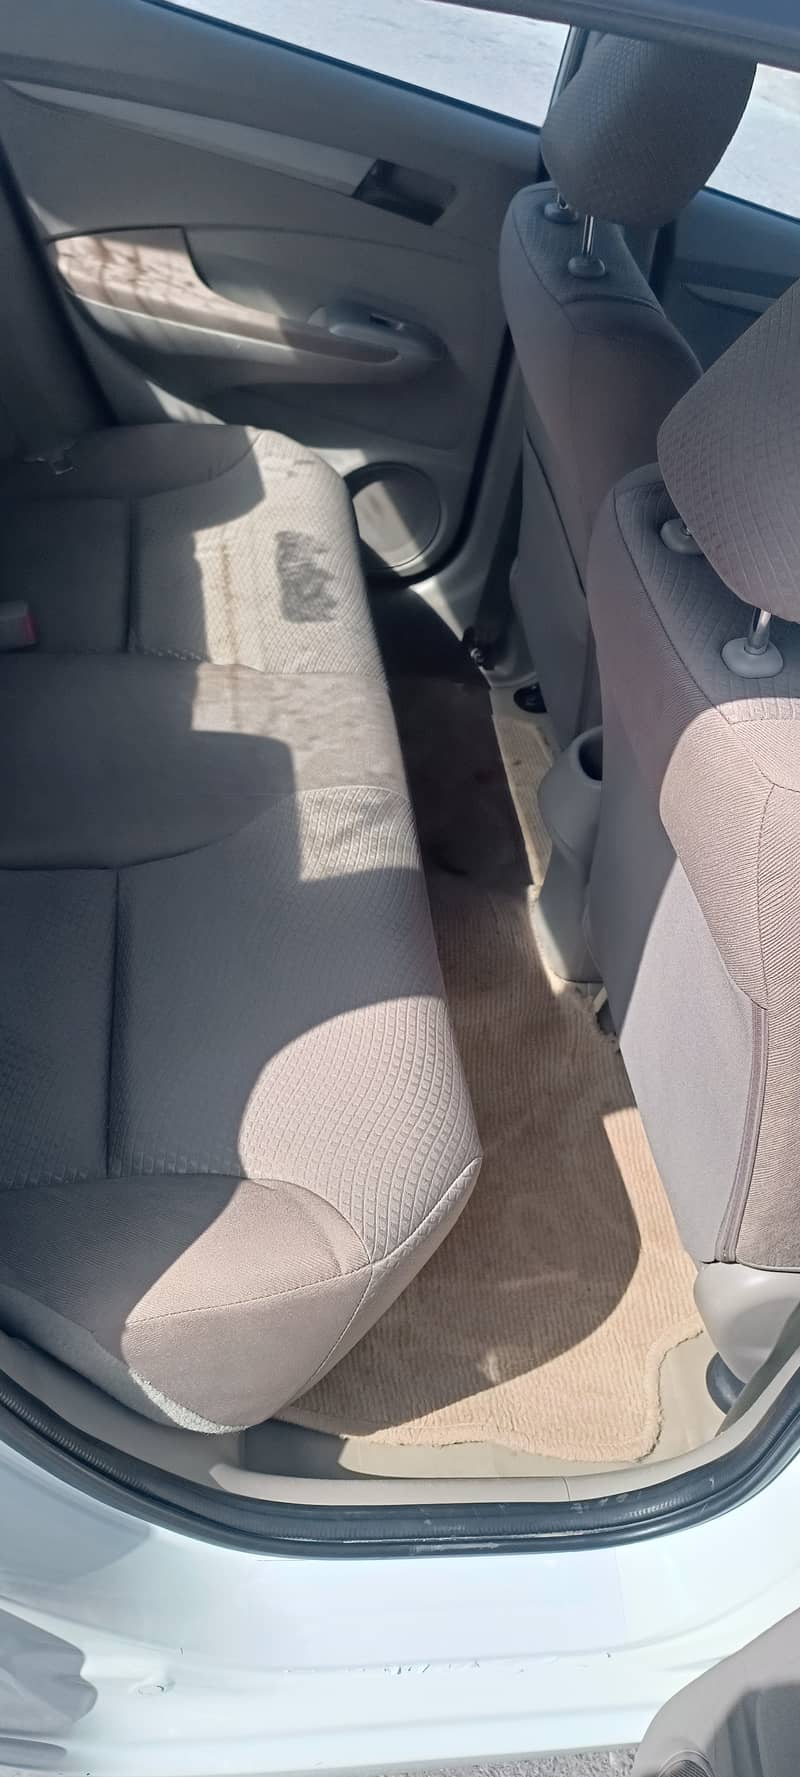 Honda City 1.3 White Color 2018 Model 7